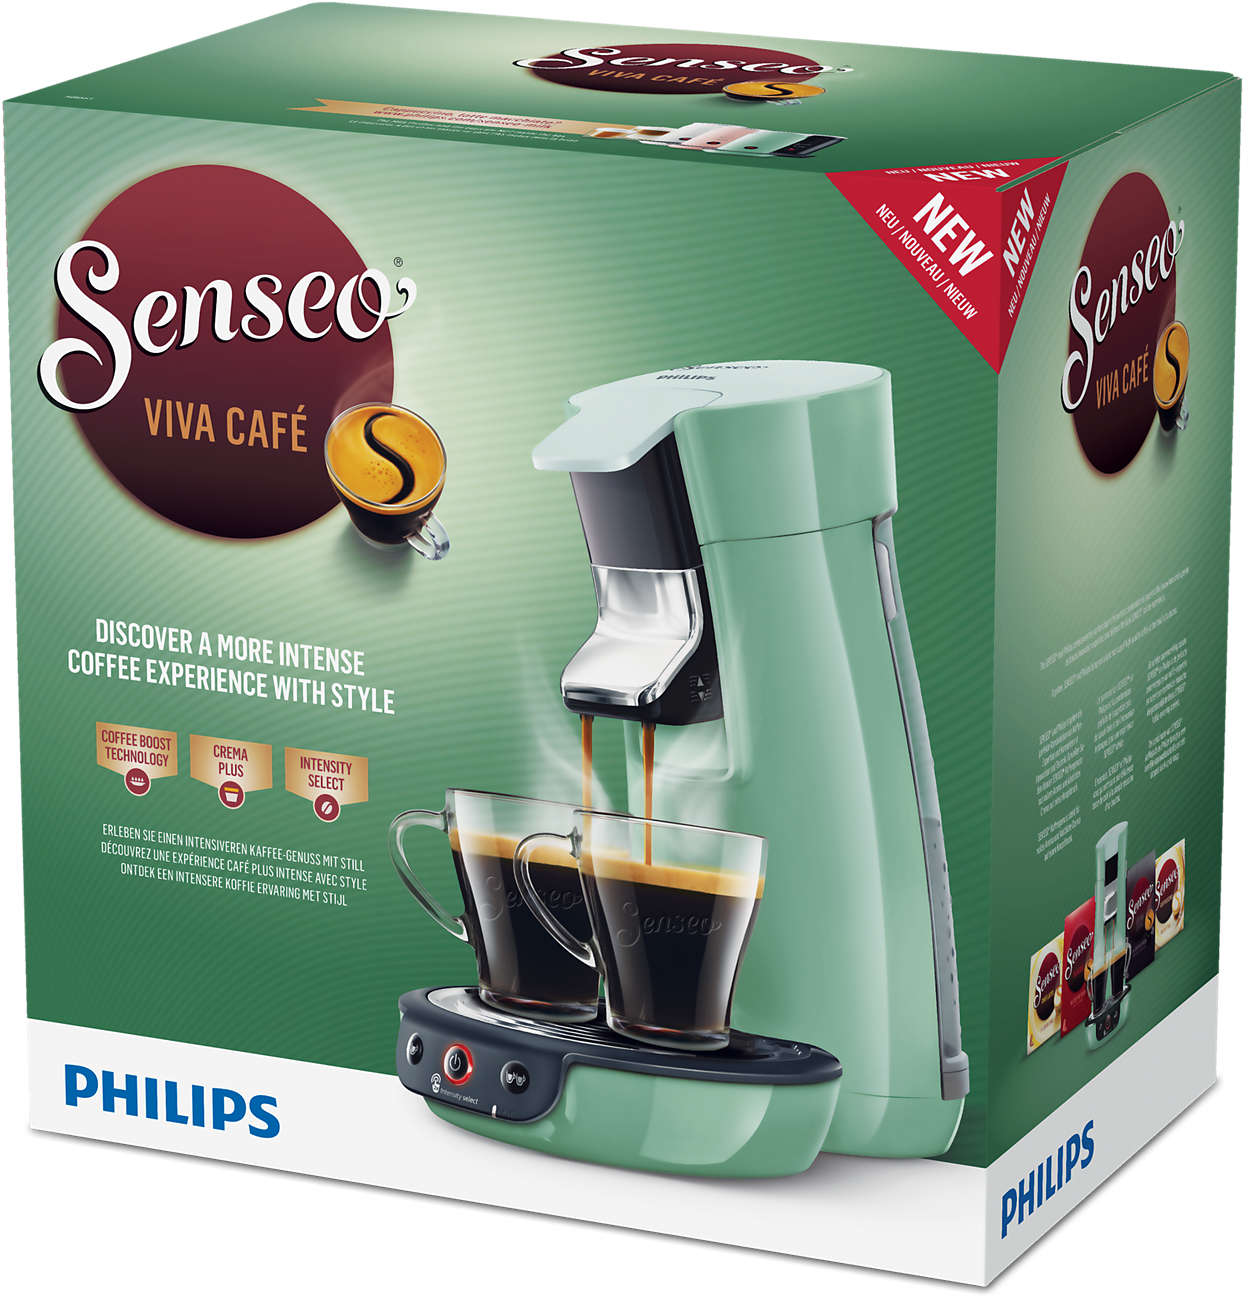 nera Senseo HD7829/60 Viva Café macchina per caffè con cialde tecnologia Kaffee Boost 